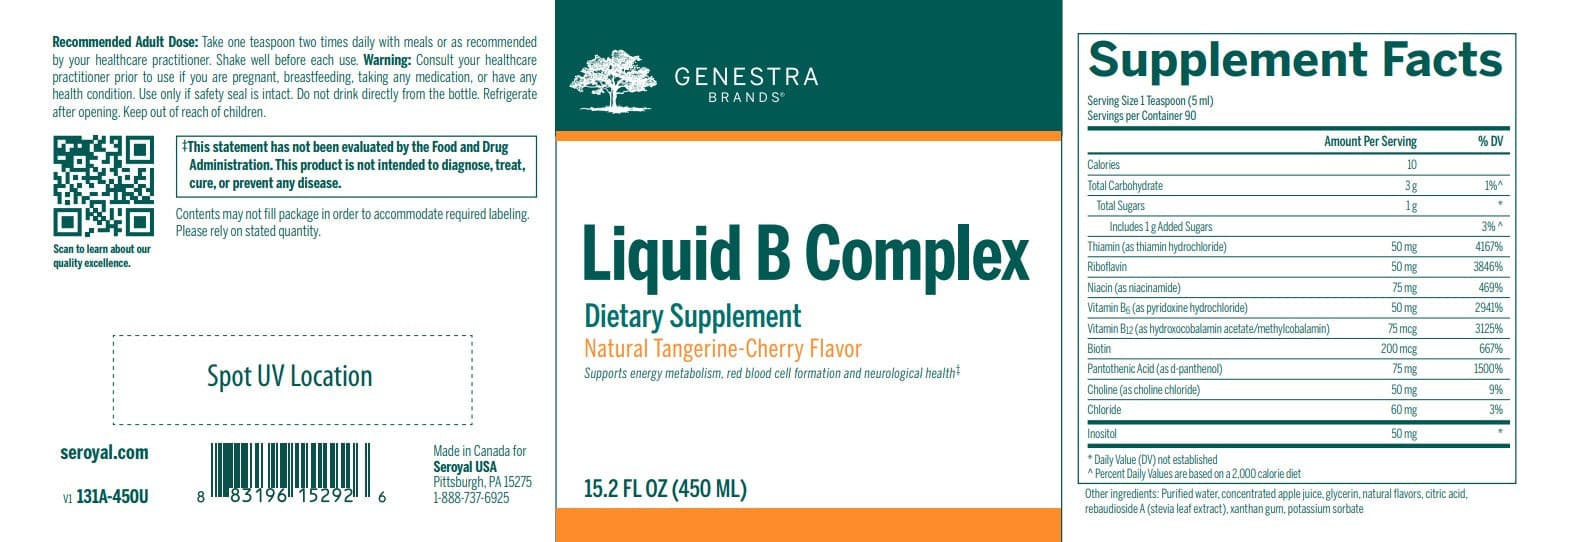 Genestra Brands Liquid B Complex Label